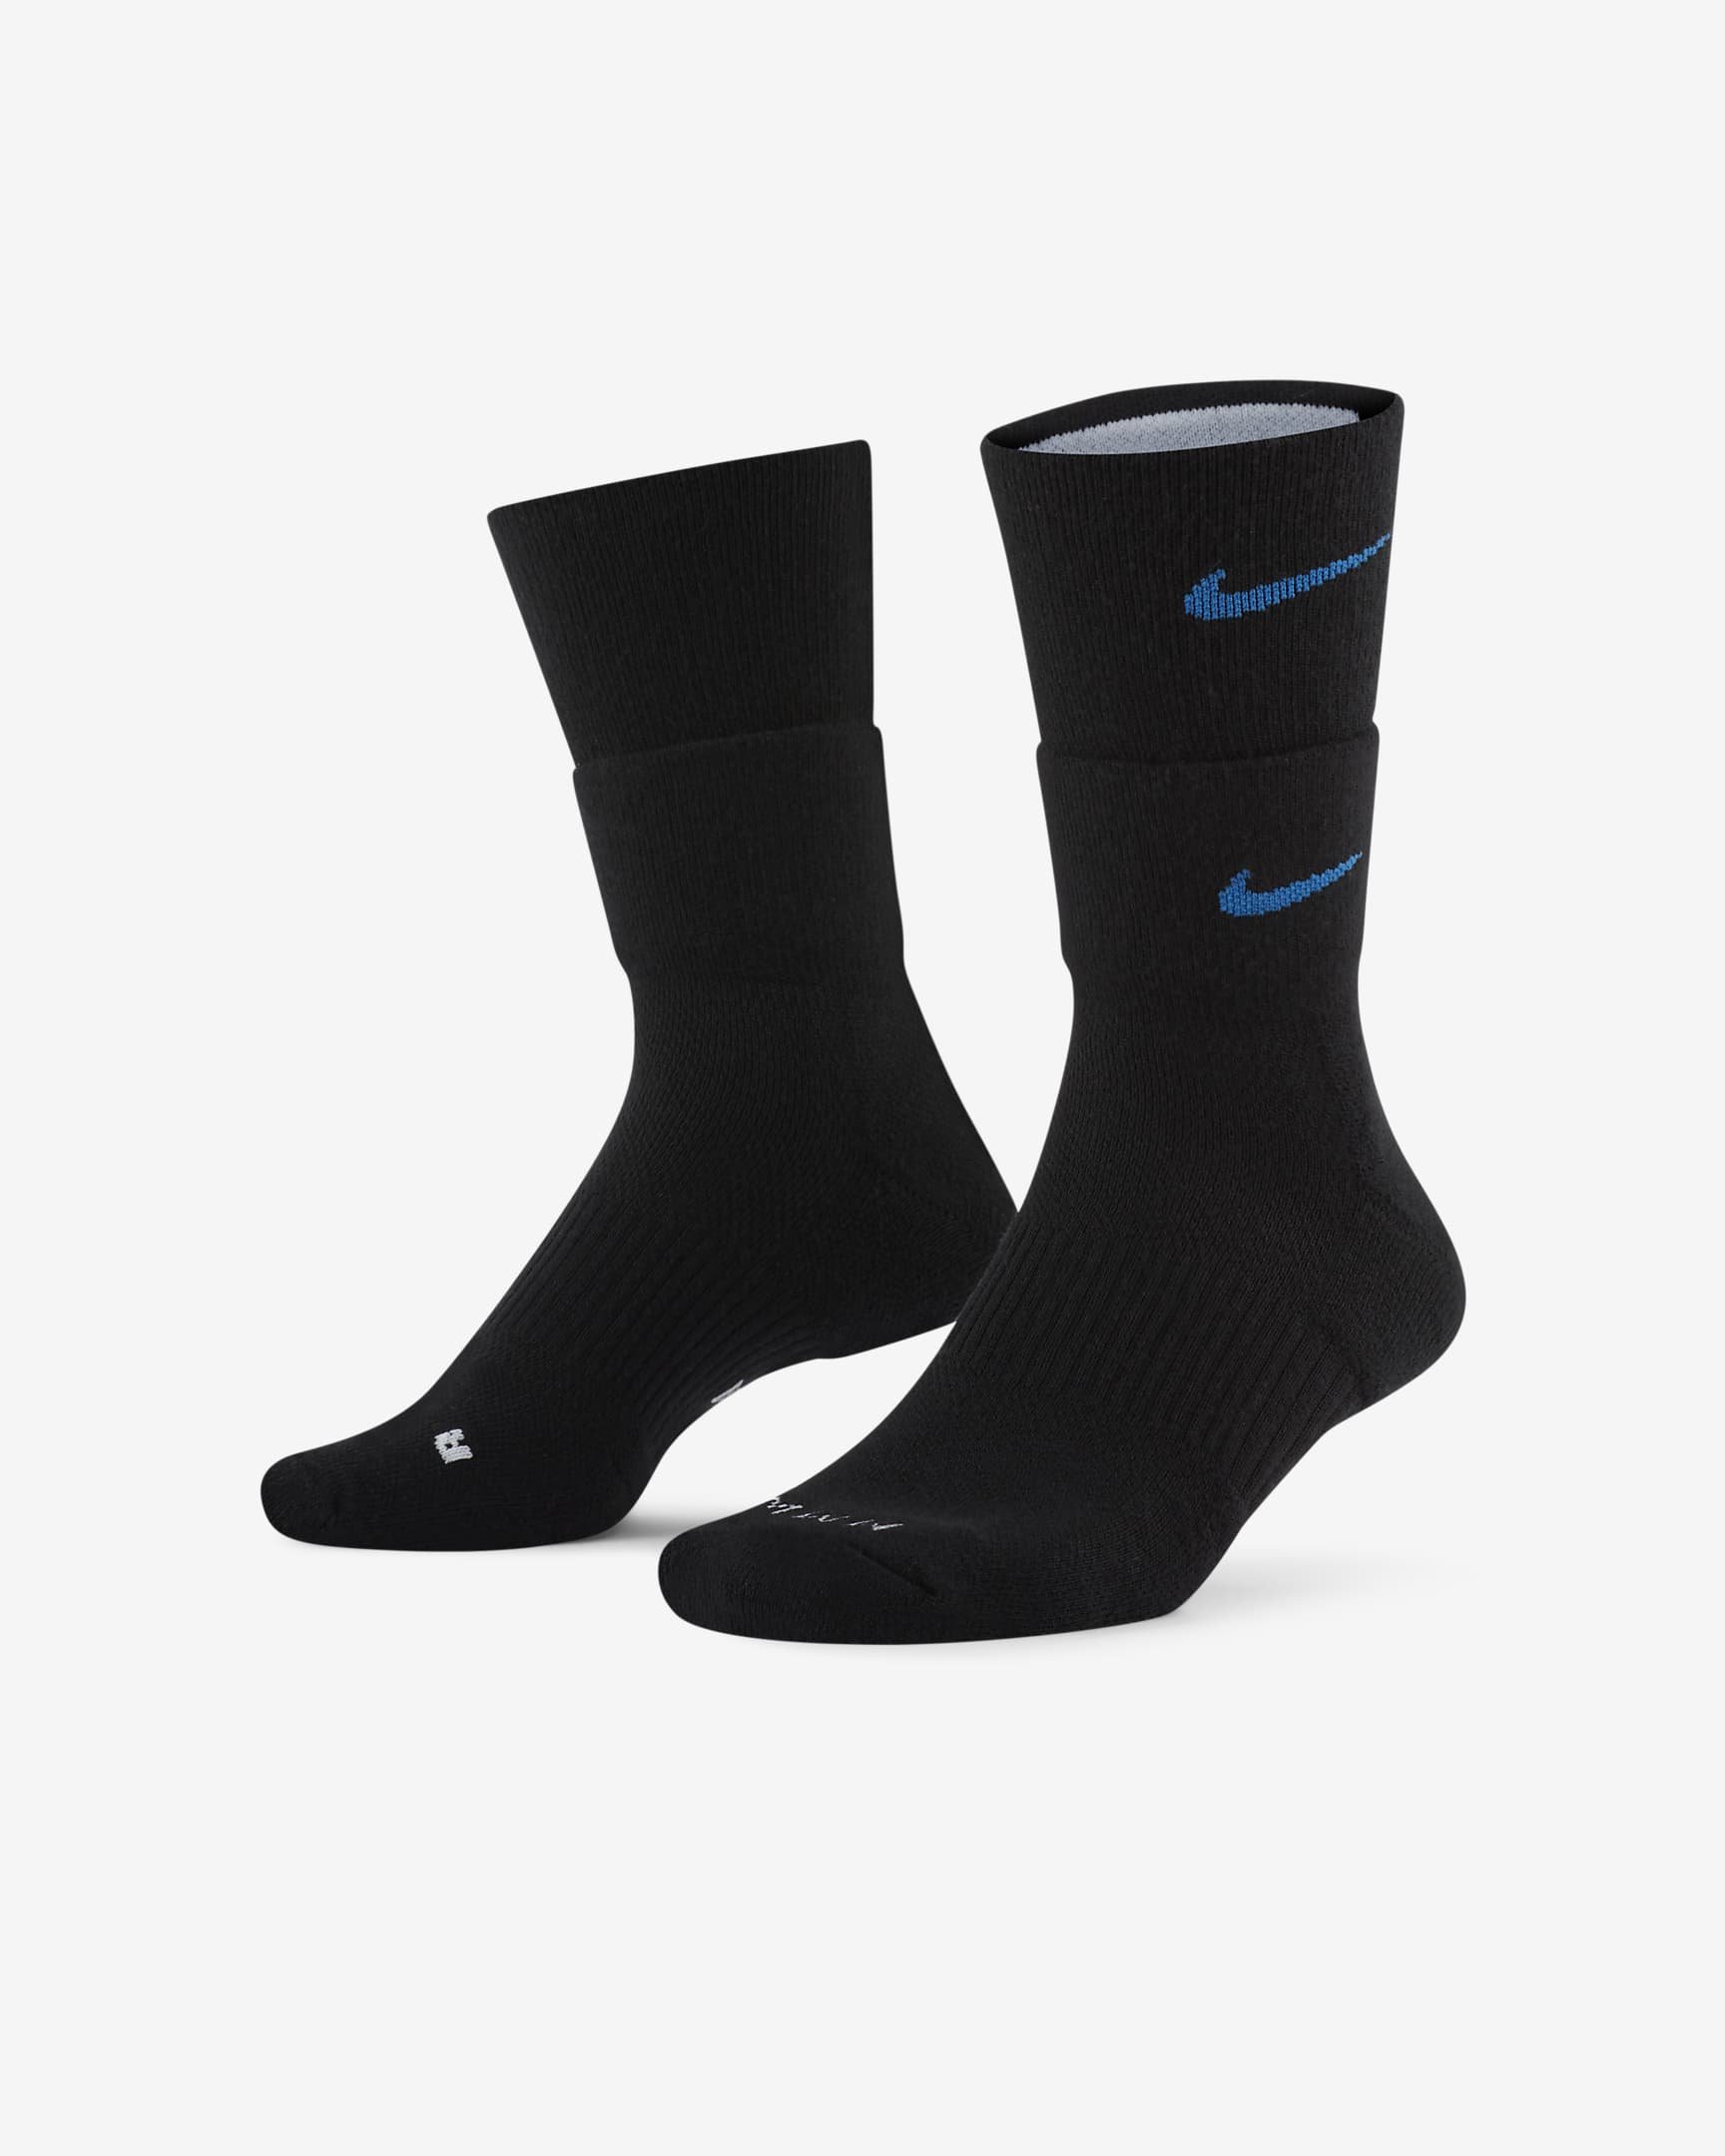 CNK-Nike-MMW-socks-blakc.jpeg